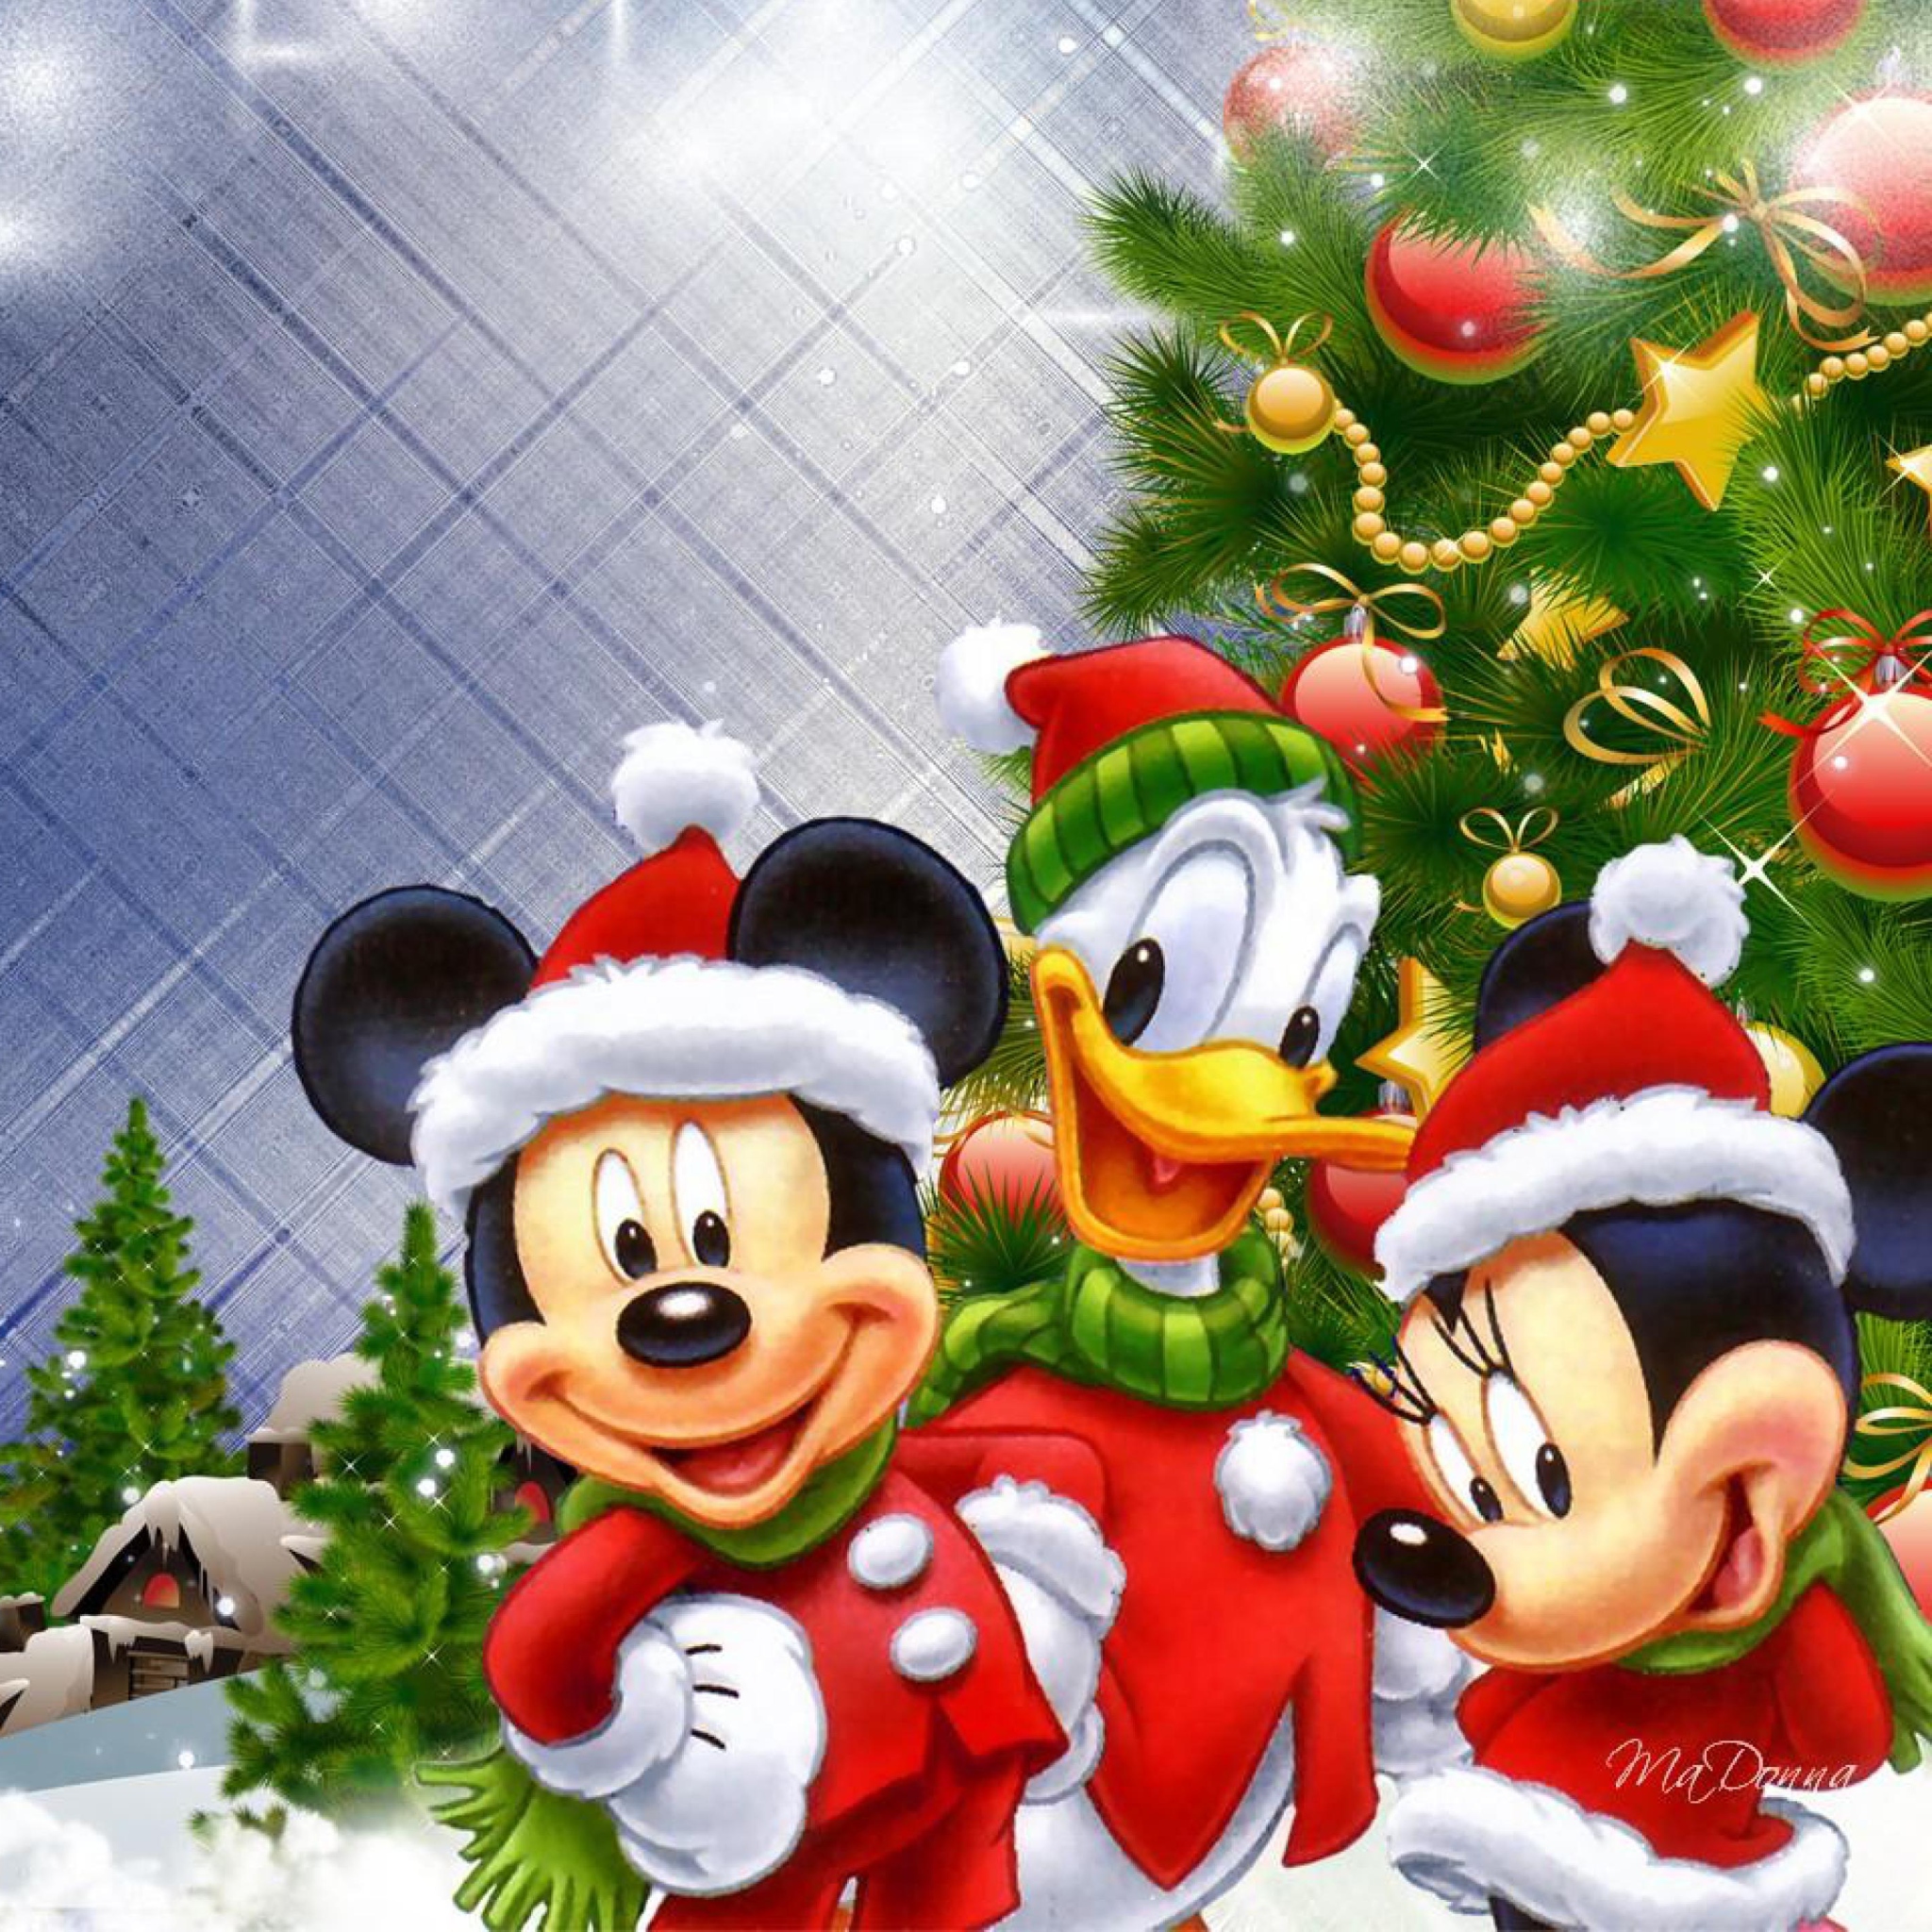 Mickey's Christmas Wallpaper for iPad 3